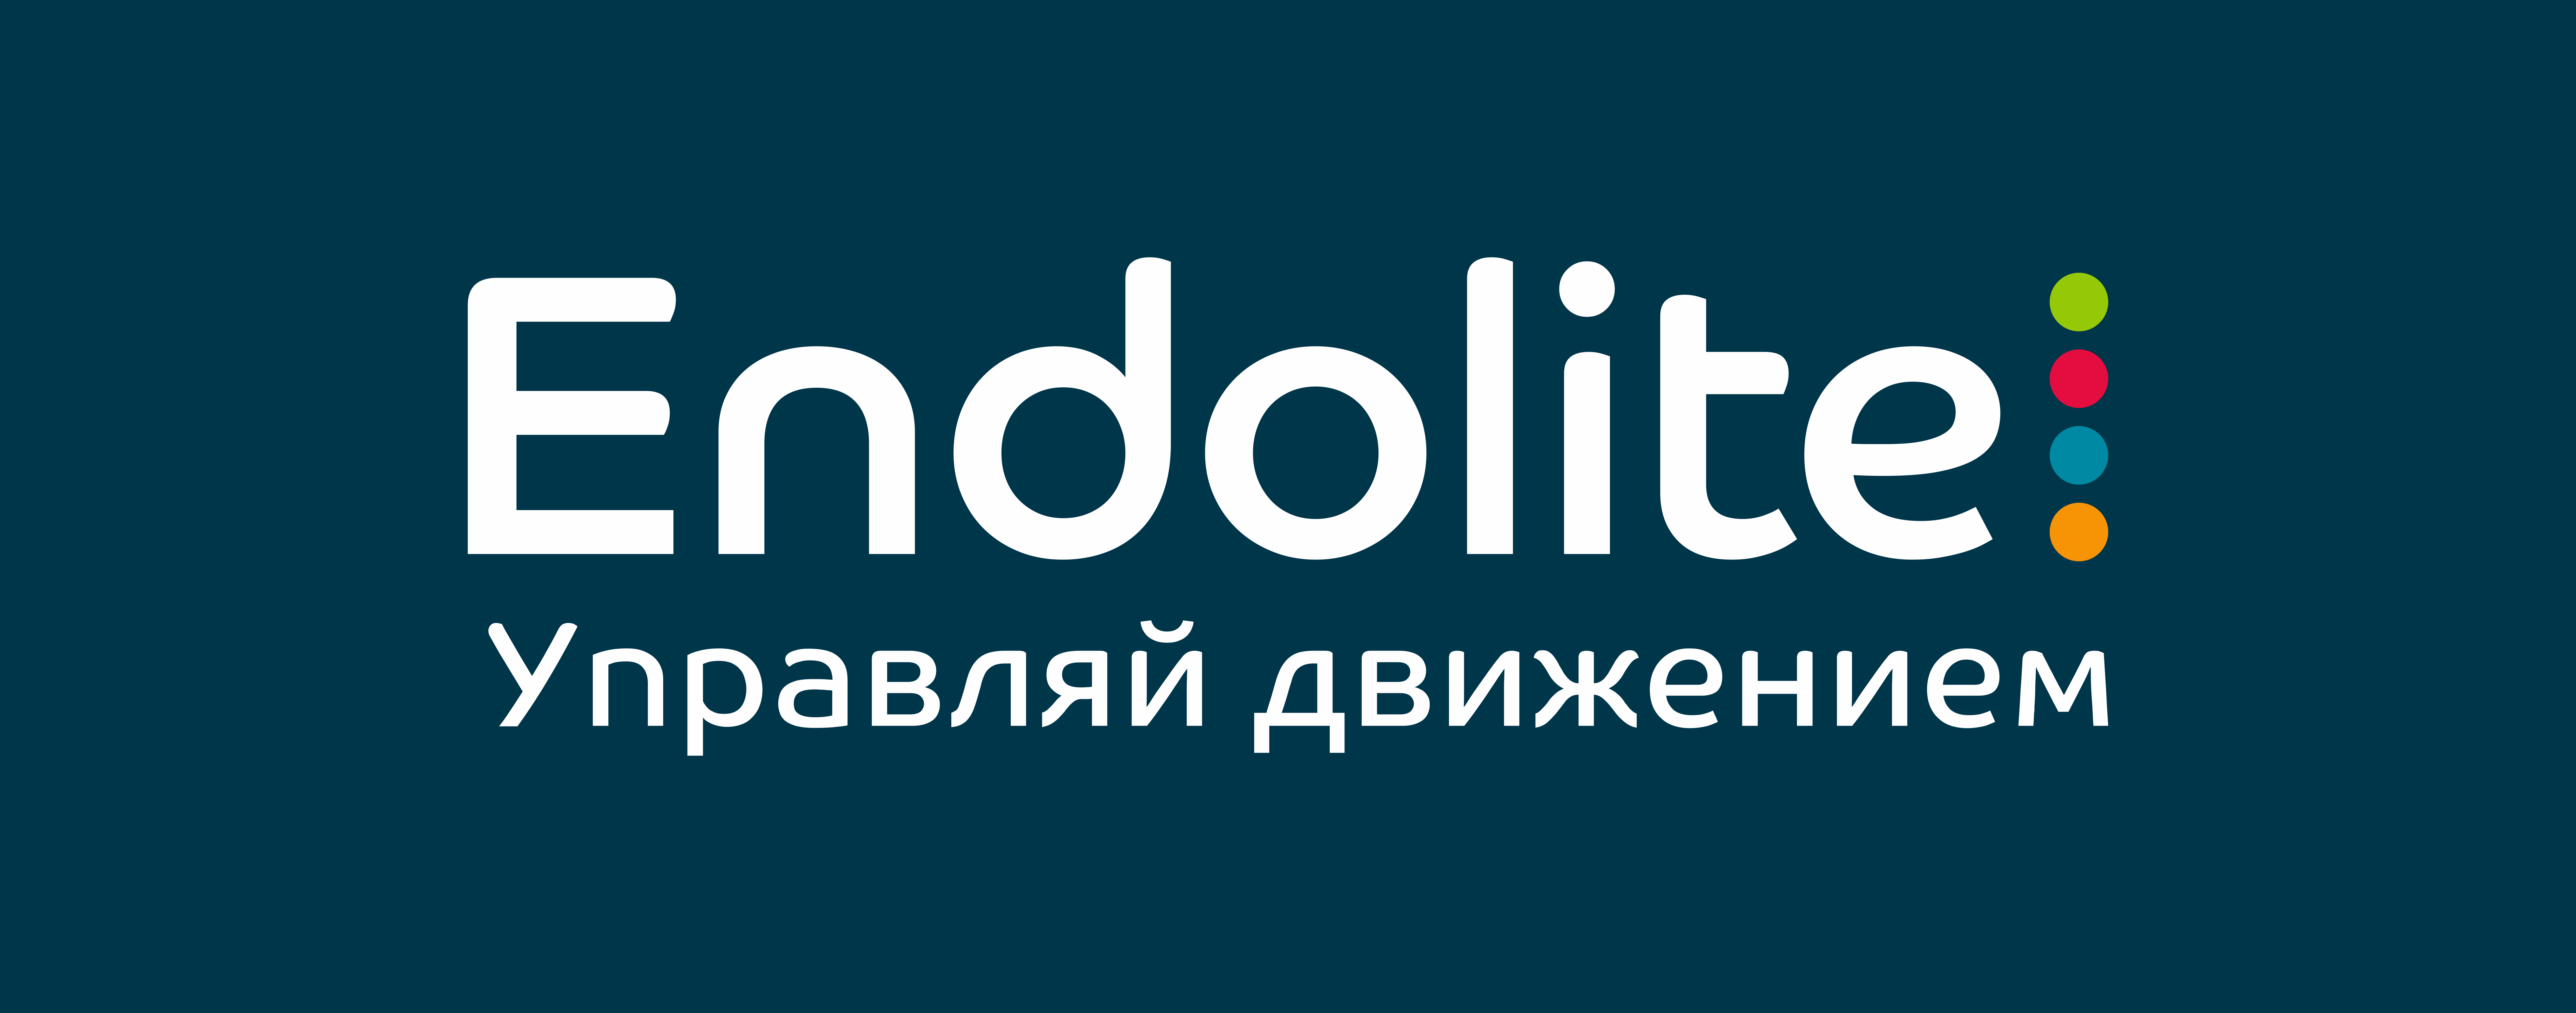 Endolite-logos-blue (1)